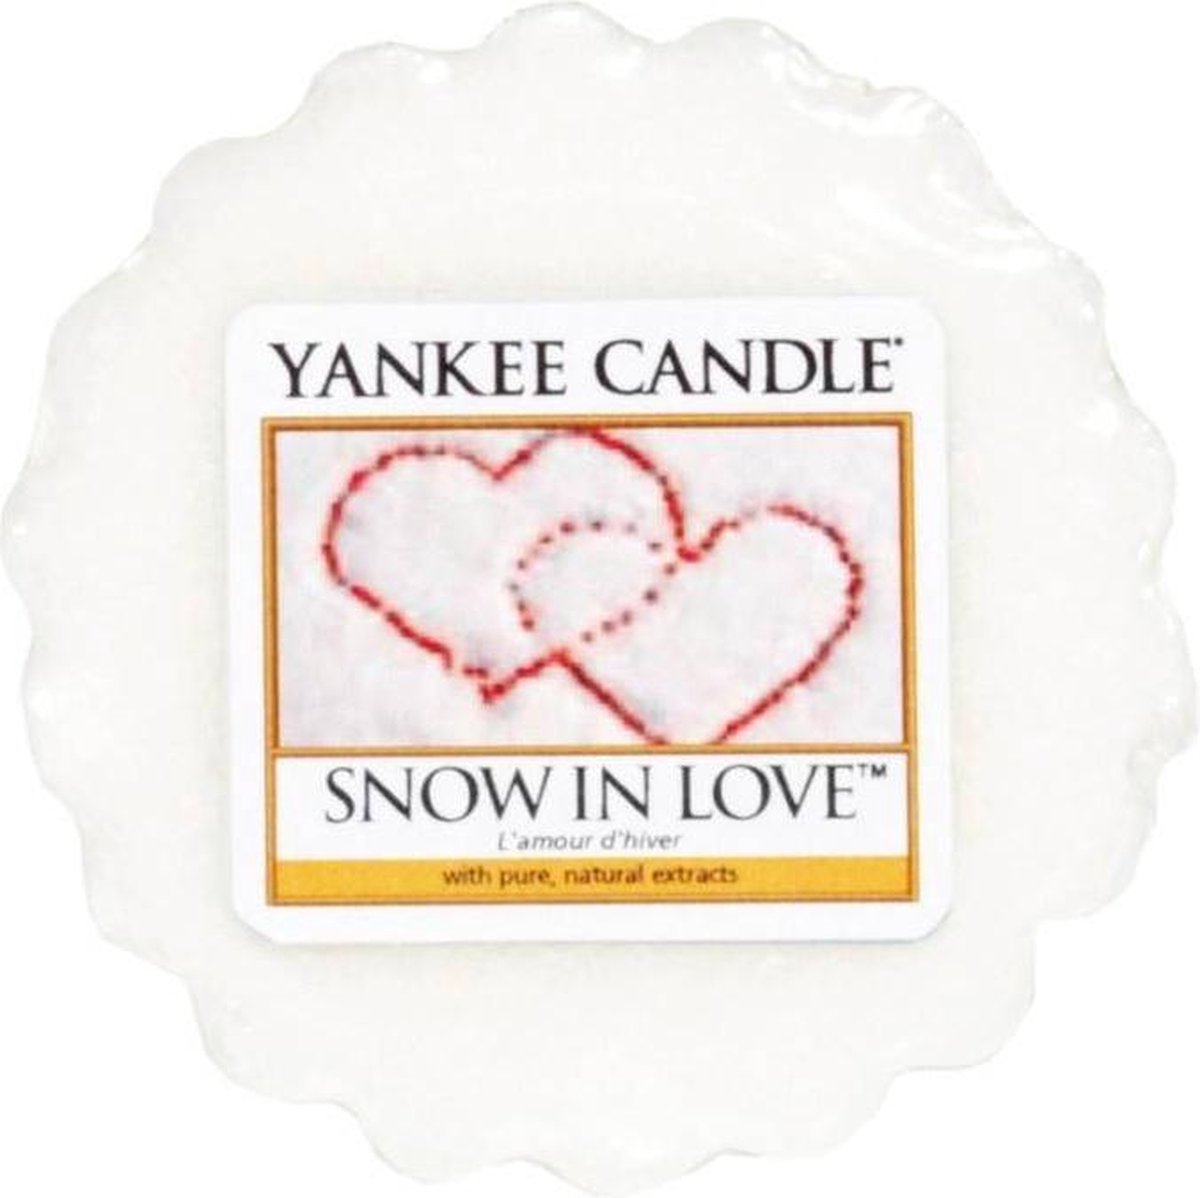 Yankee Candle Snow In Love Tart